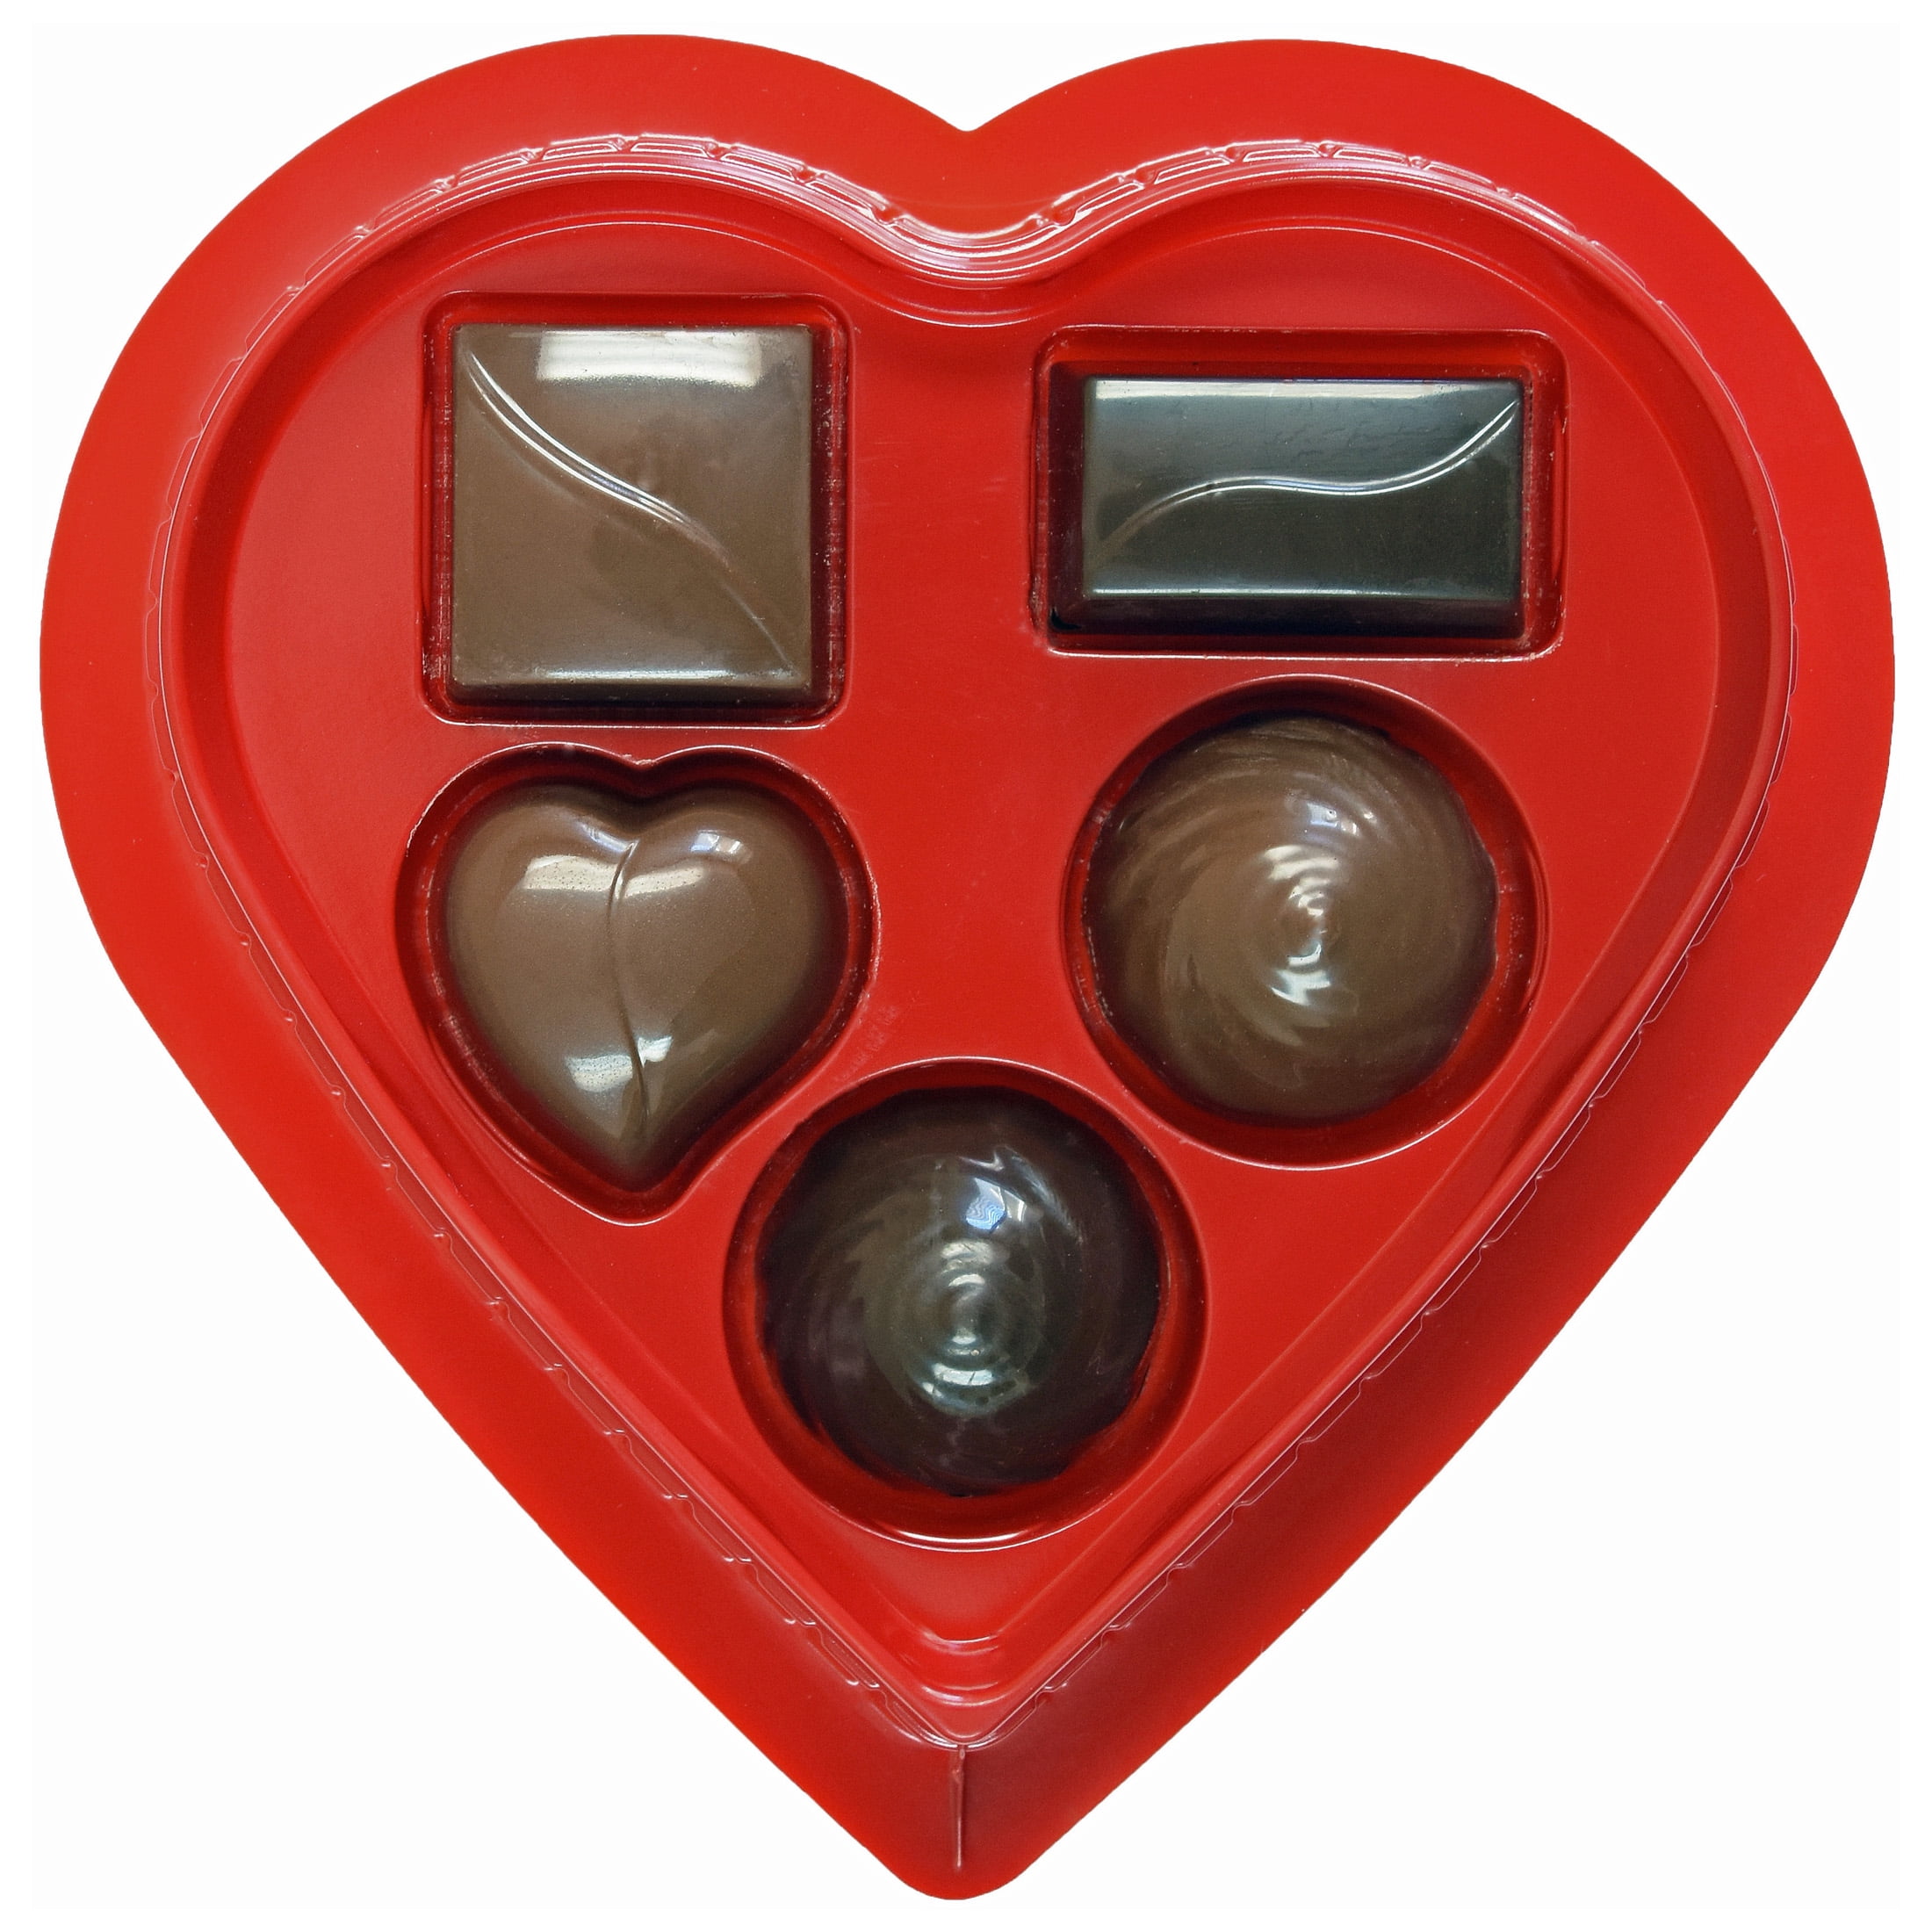 Elmer Chocolate Elmer's, 2oz Rose Valentine Heart, 5 Pieces Assorted Milk & Dark Chocolates